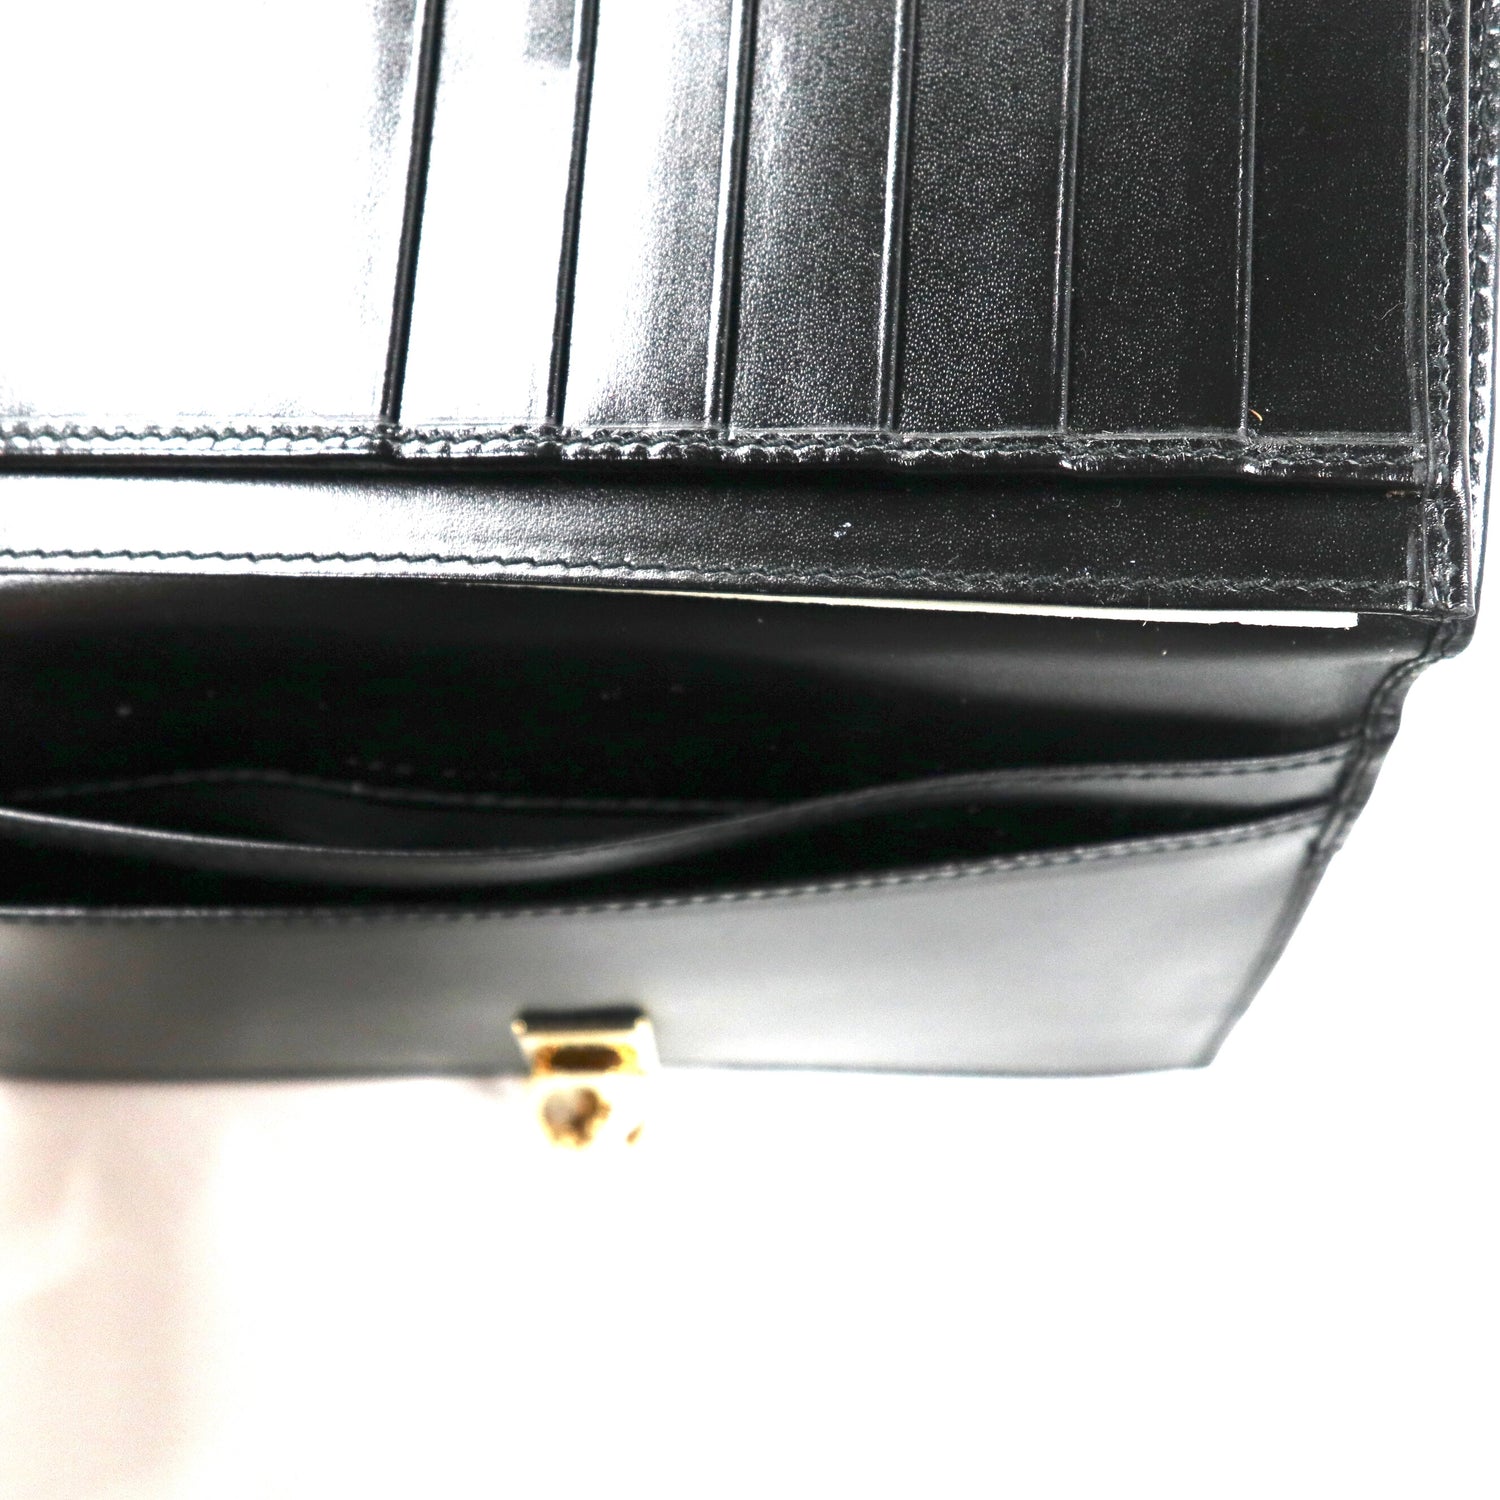 GUCCI LONG WALLET Black leather calfskin G logo bracket 035-2192